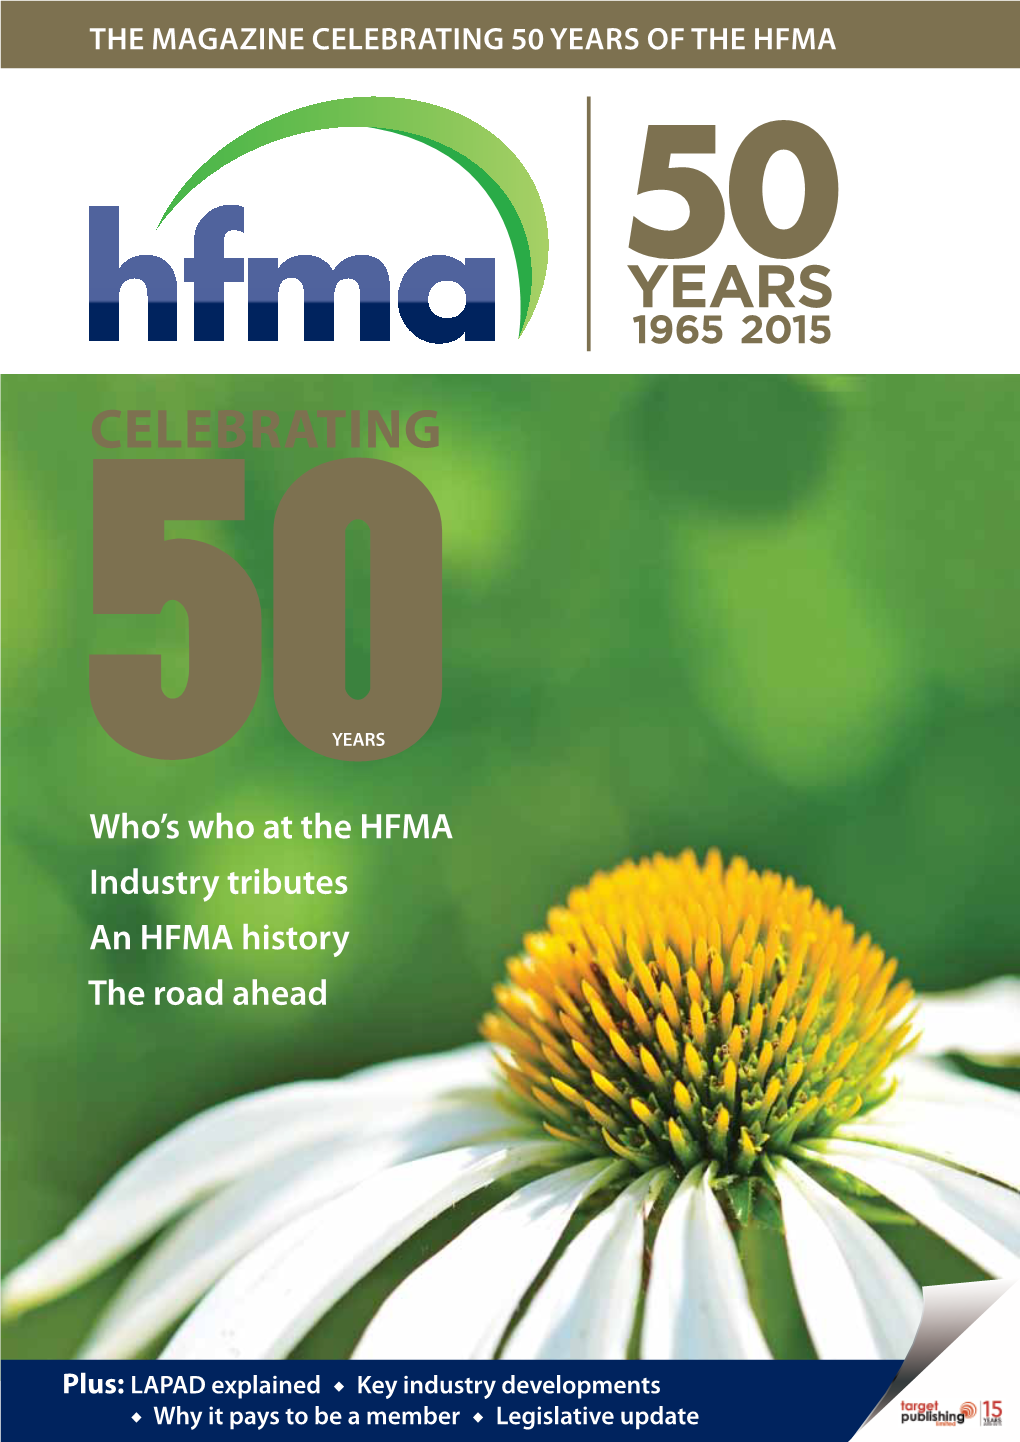 Celebrating 50 YEARS of the HFMA